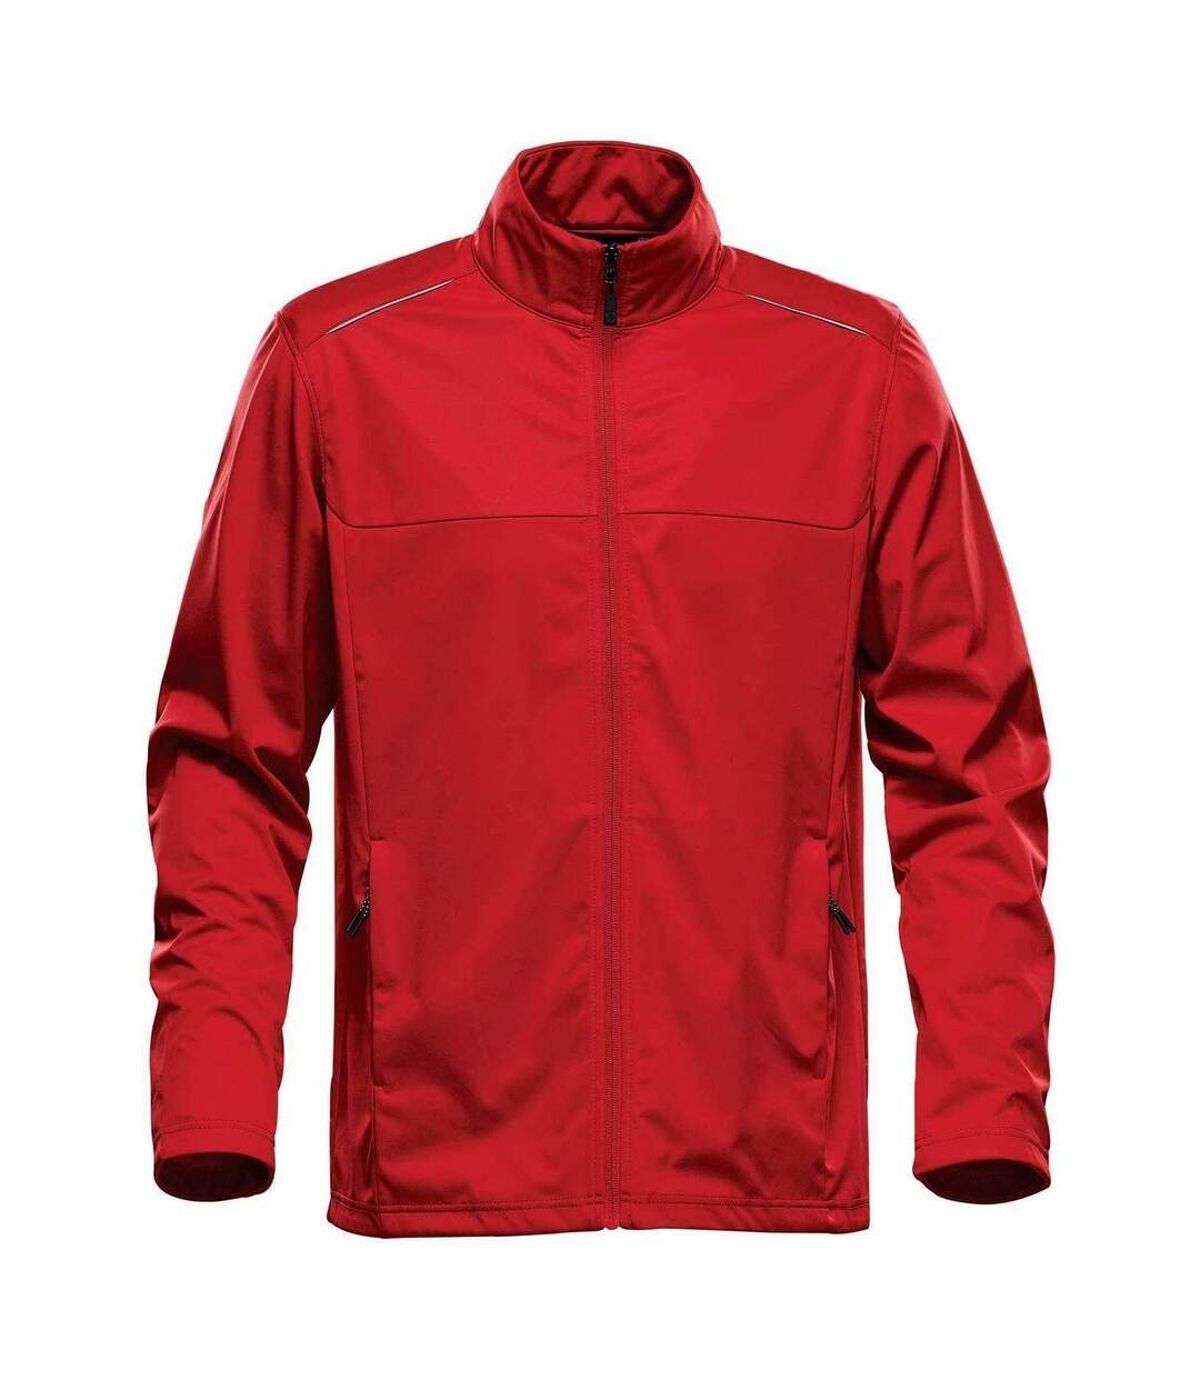 Stormtech Mens Greenwich Lightweight Softshell Jacket (Bright Red) - UTBC4645